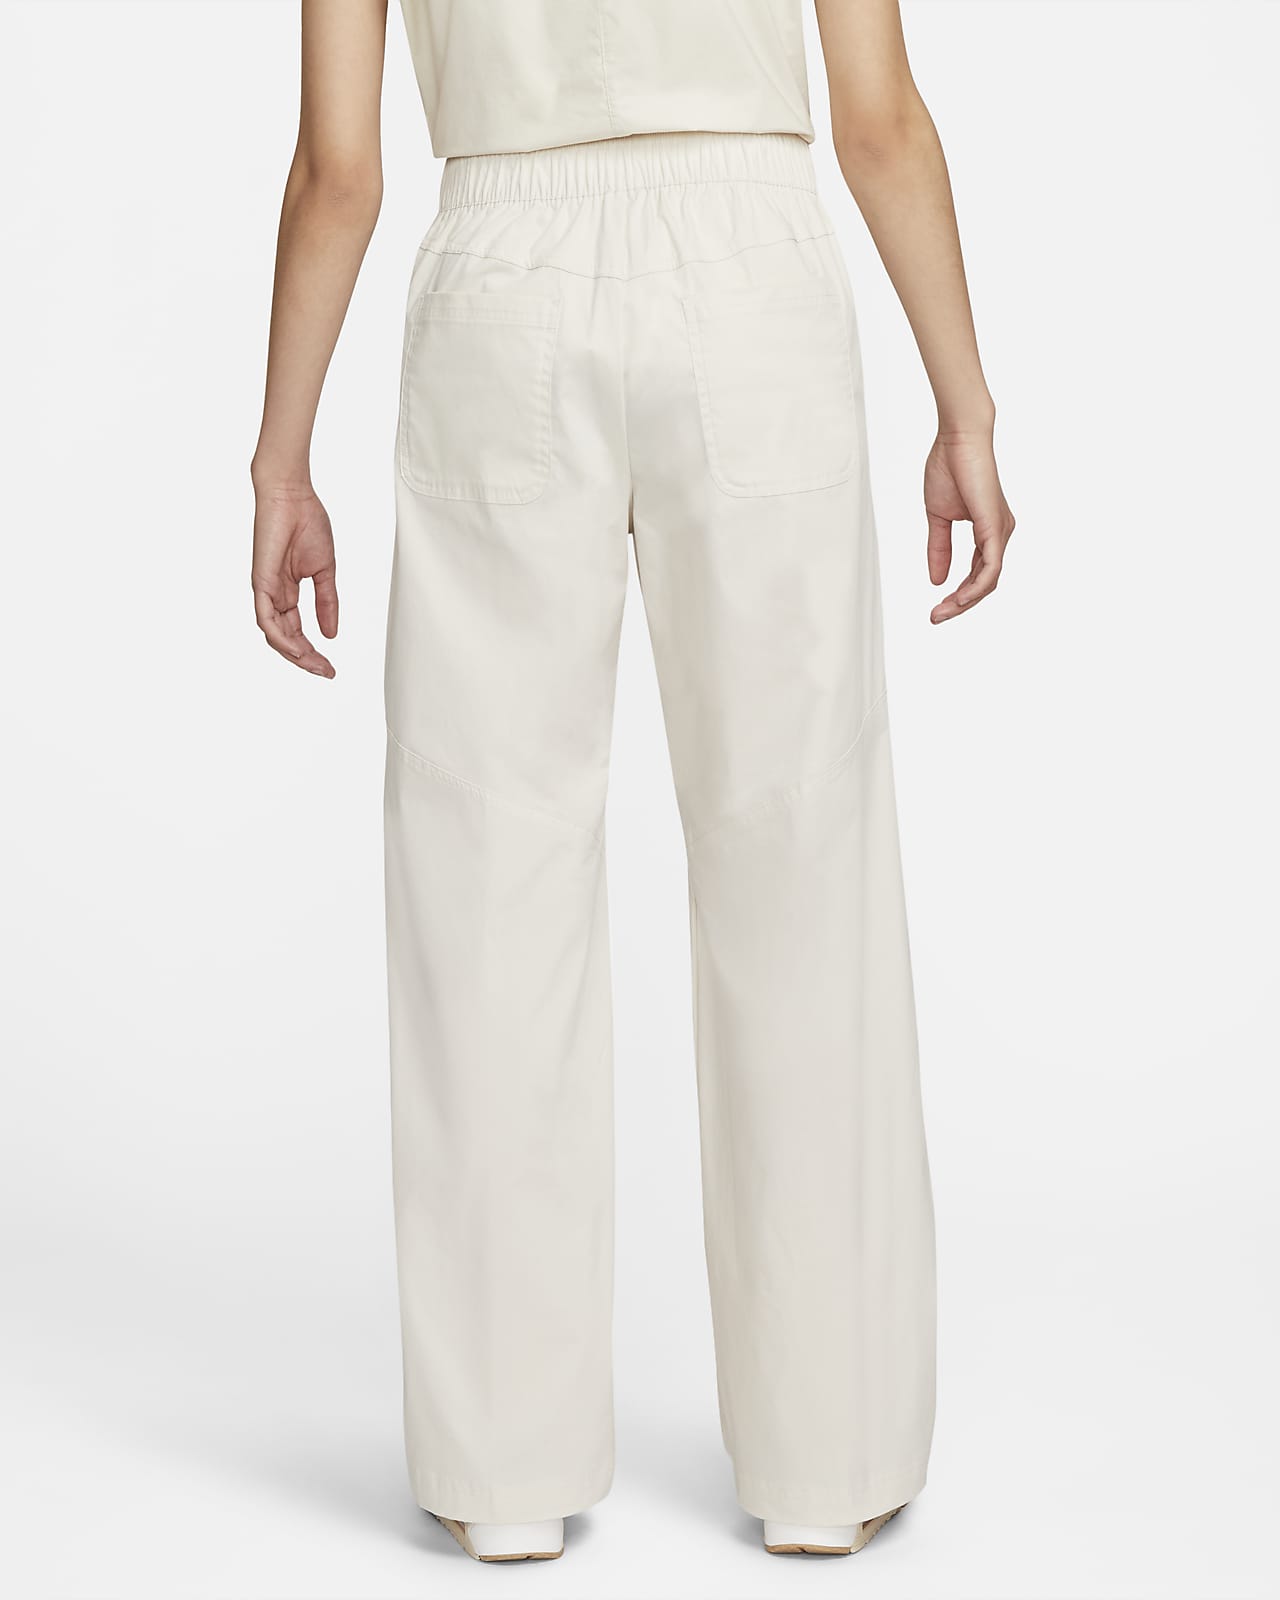 Pure White Linen High Waisted Trouser - WOMEN Pants